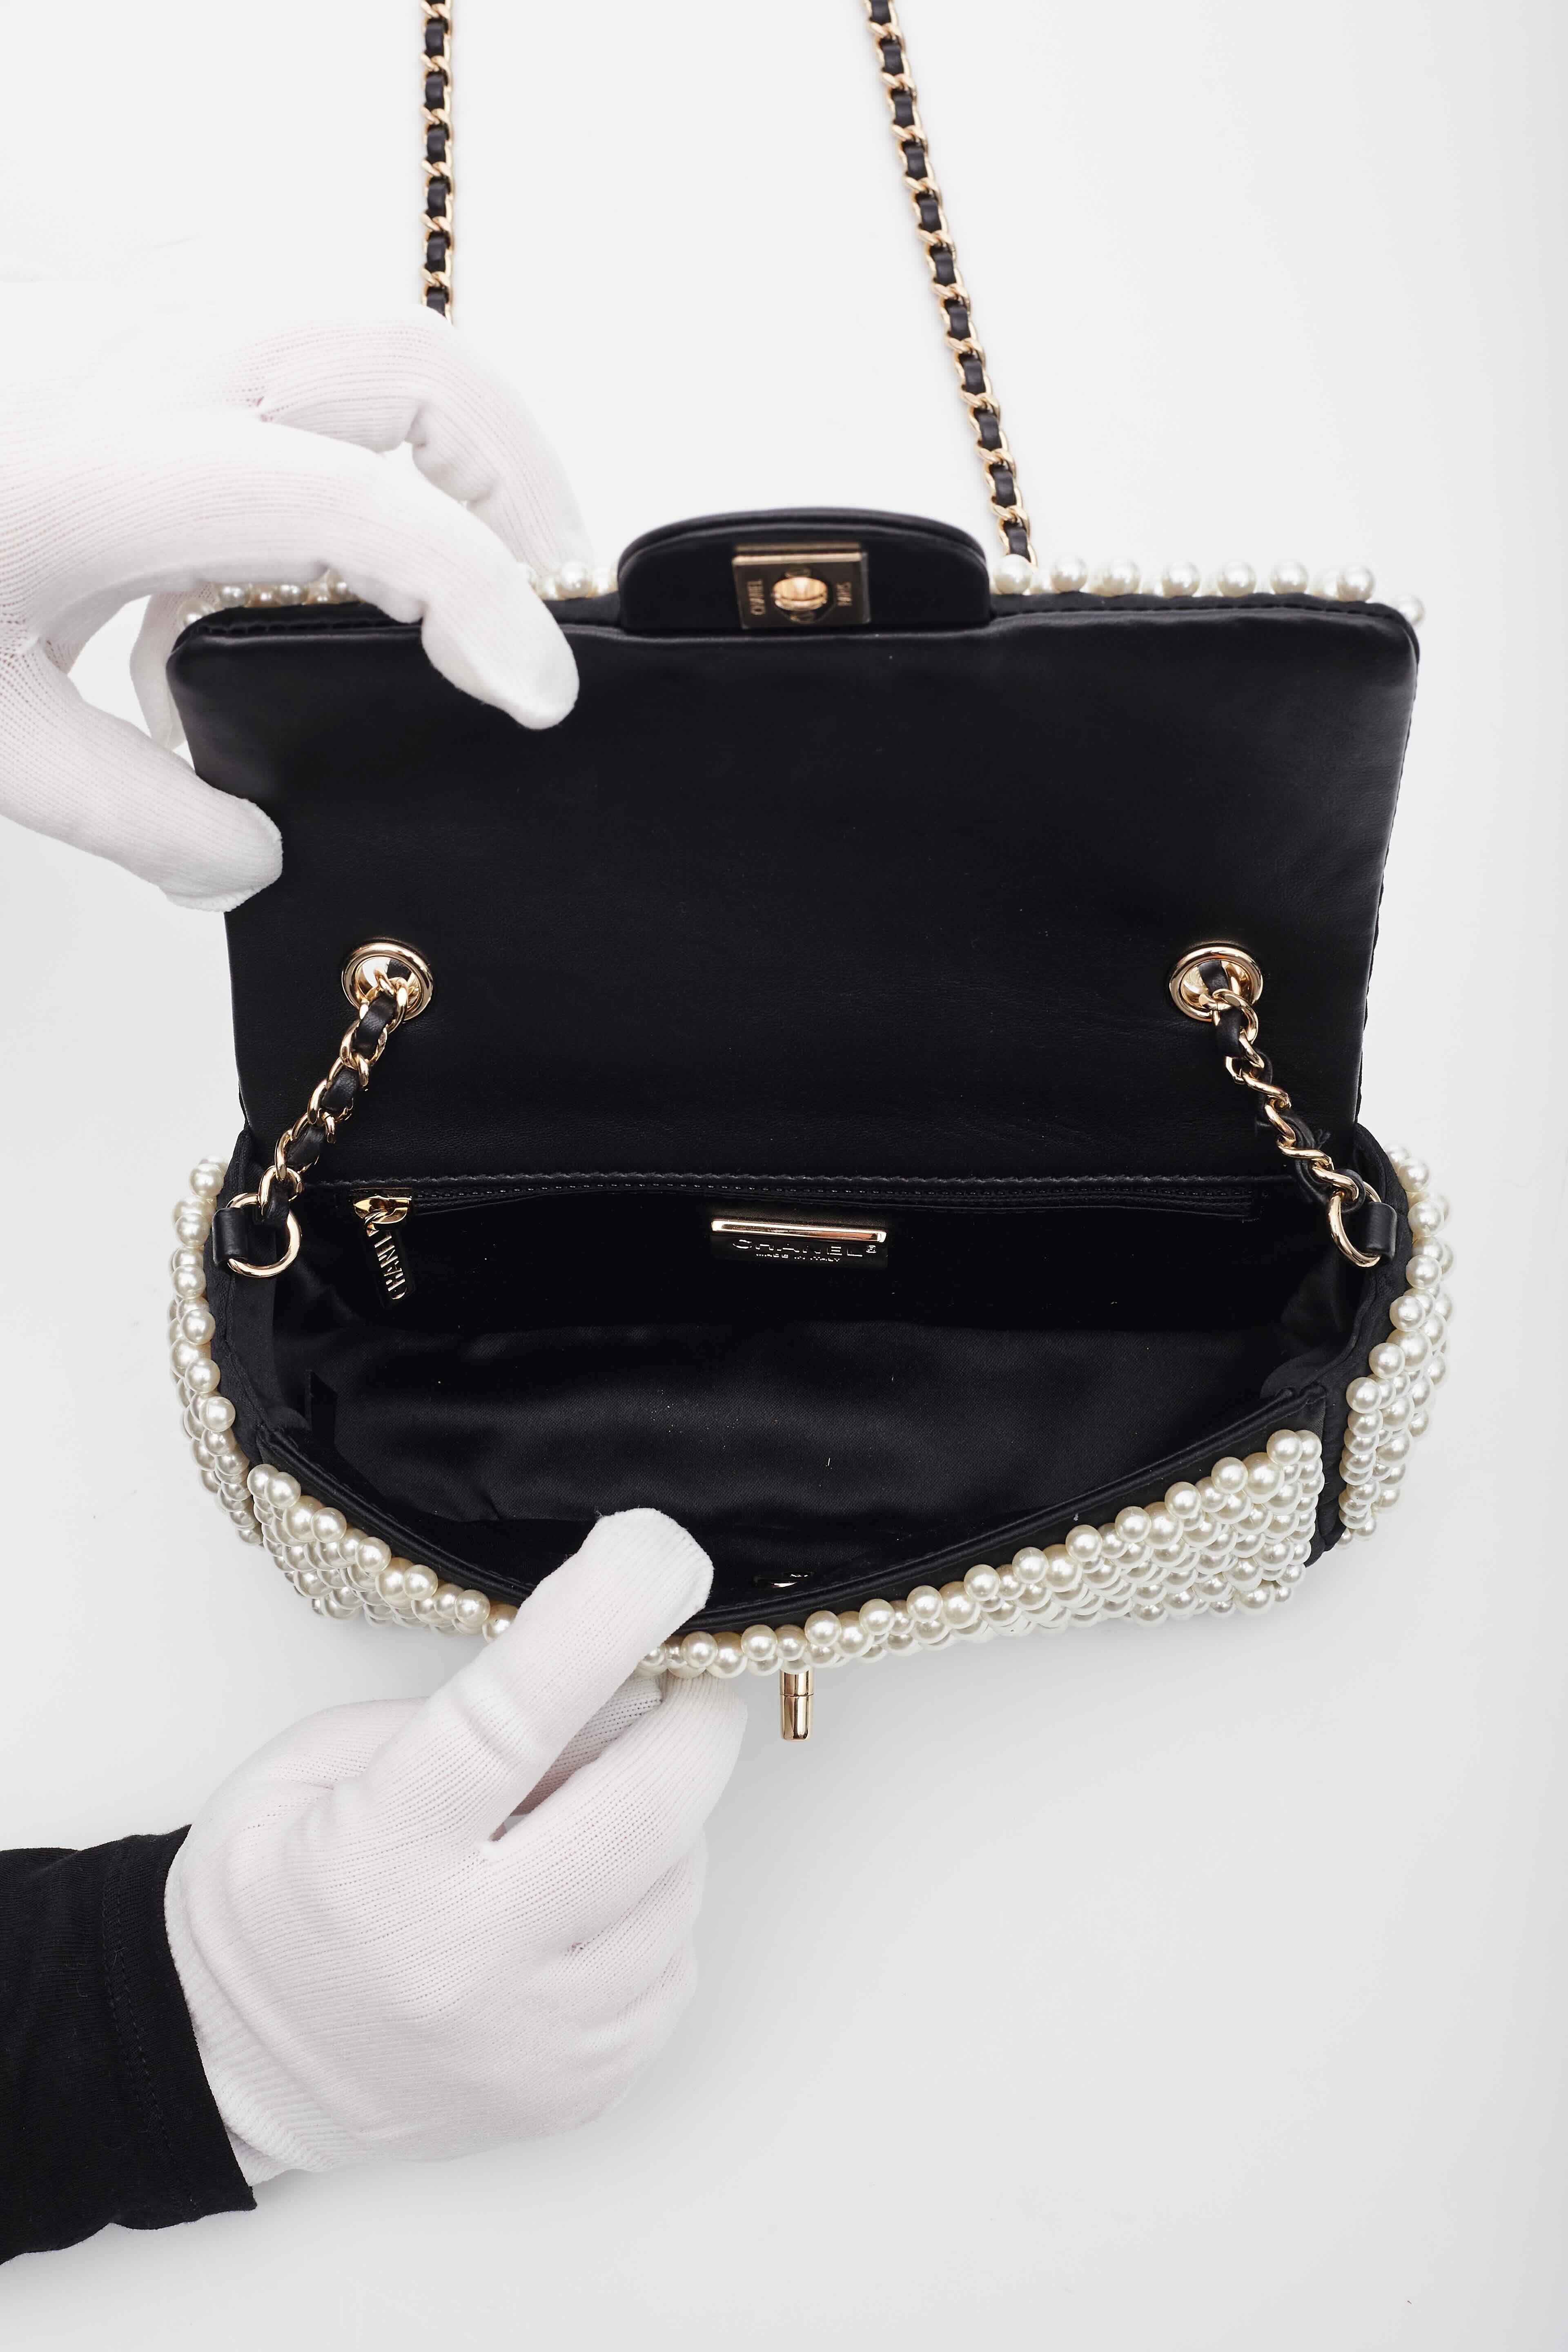 Chanel Black Lambskin Pearl on Flap Bag For Sale 4